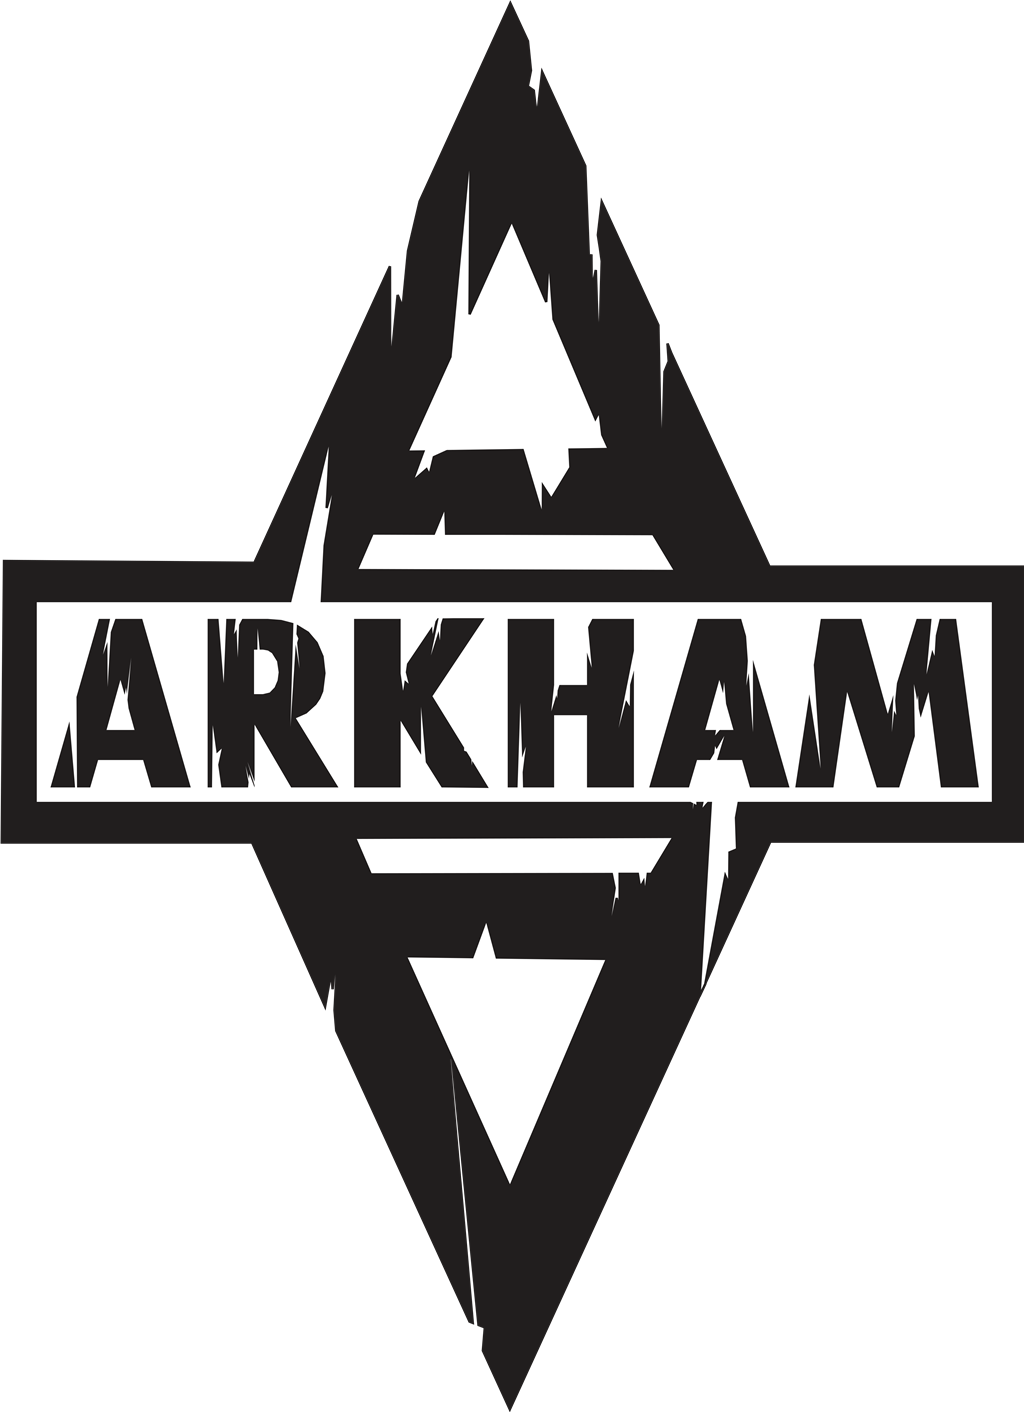 Arkham logotype, transparent .png, medium, large